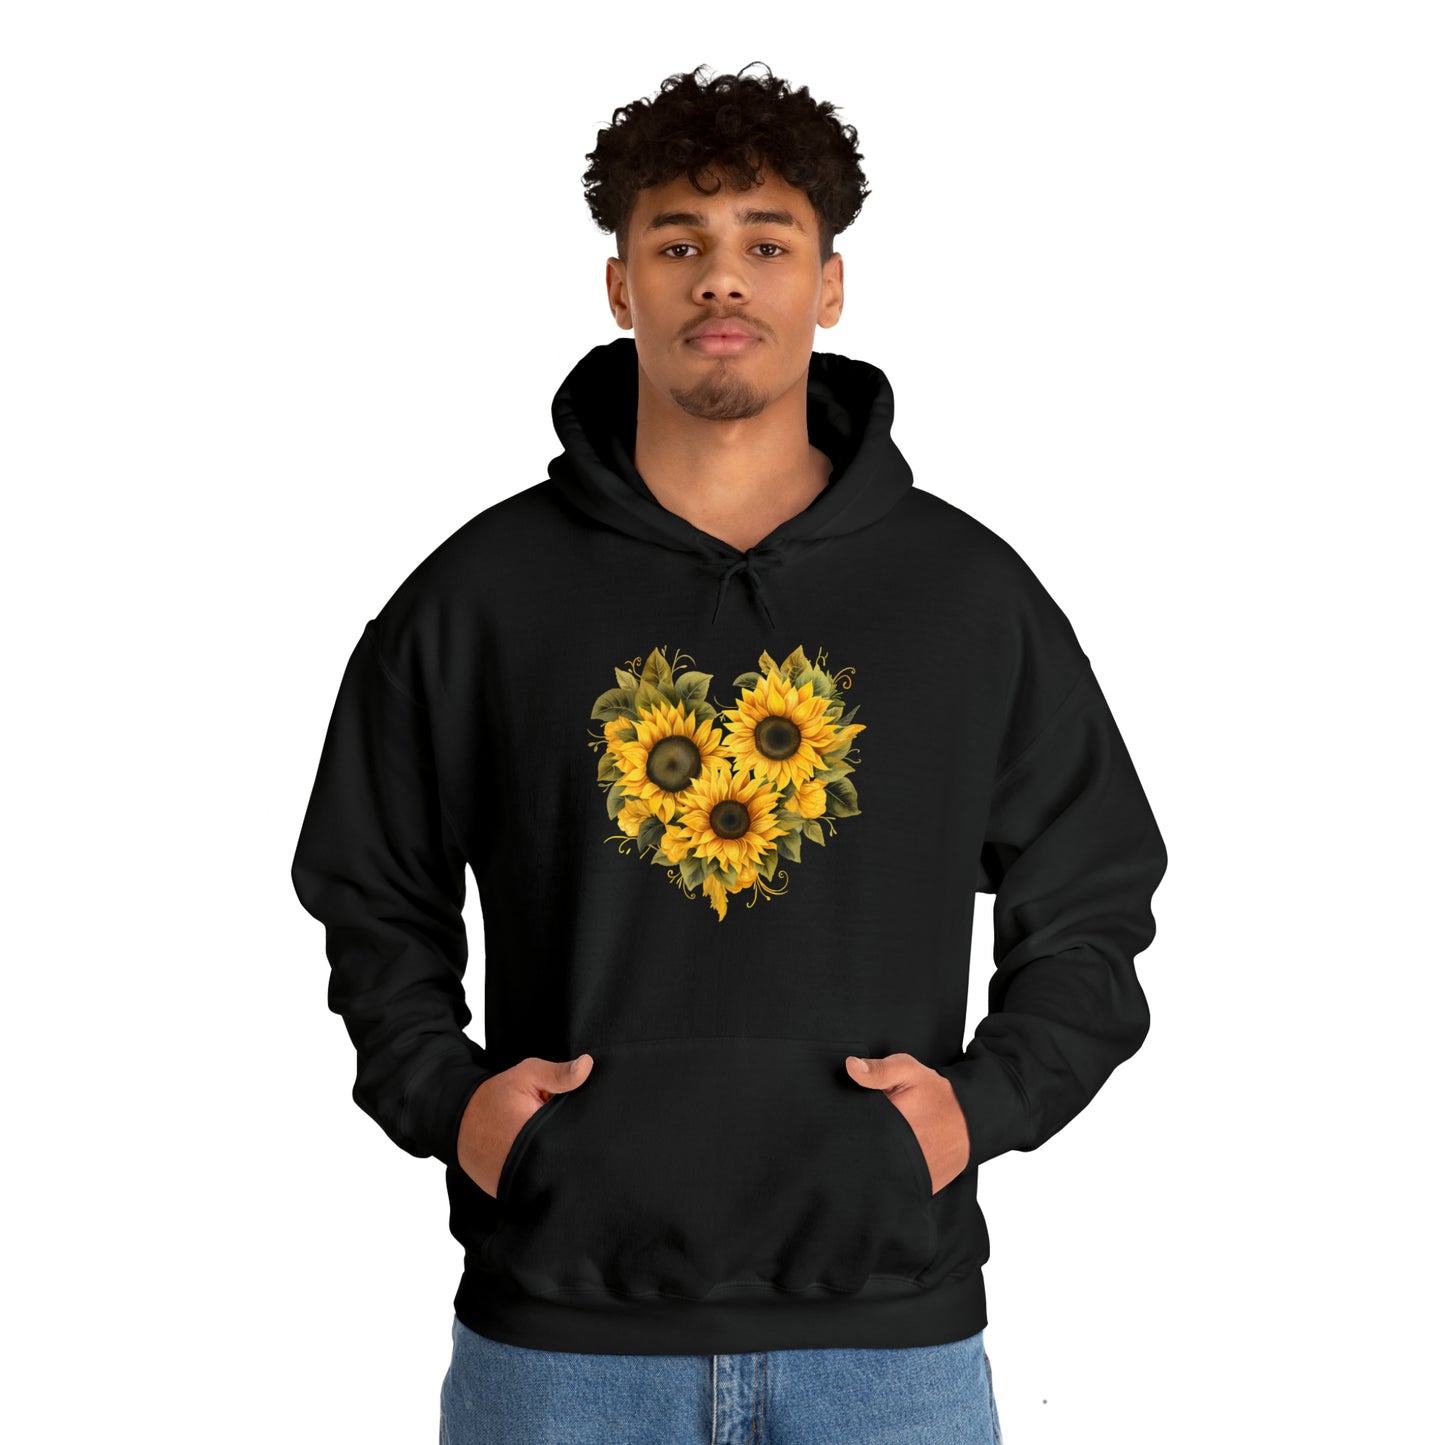 "The Heart of Sunflowers" | unisex Hoodie